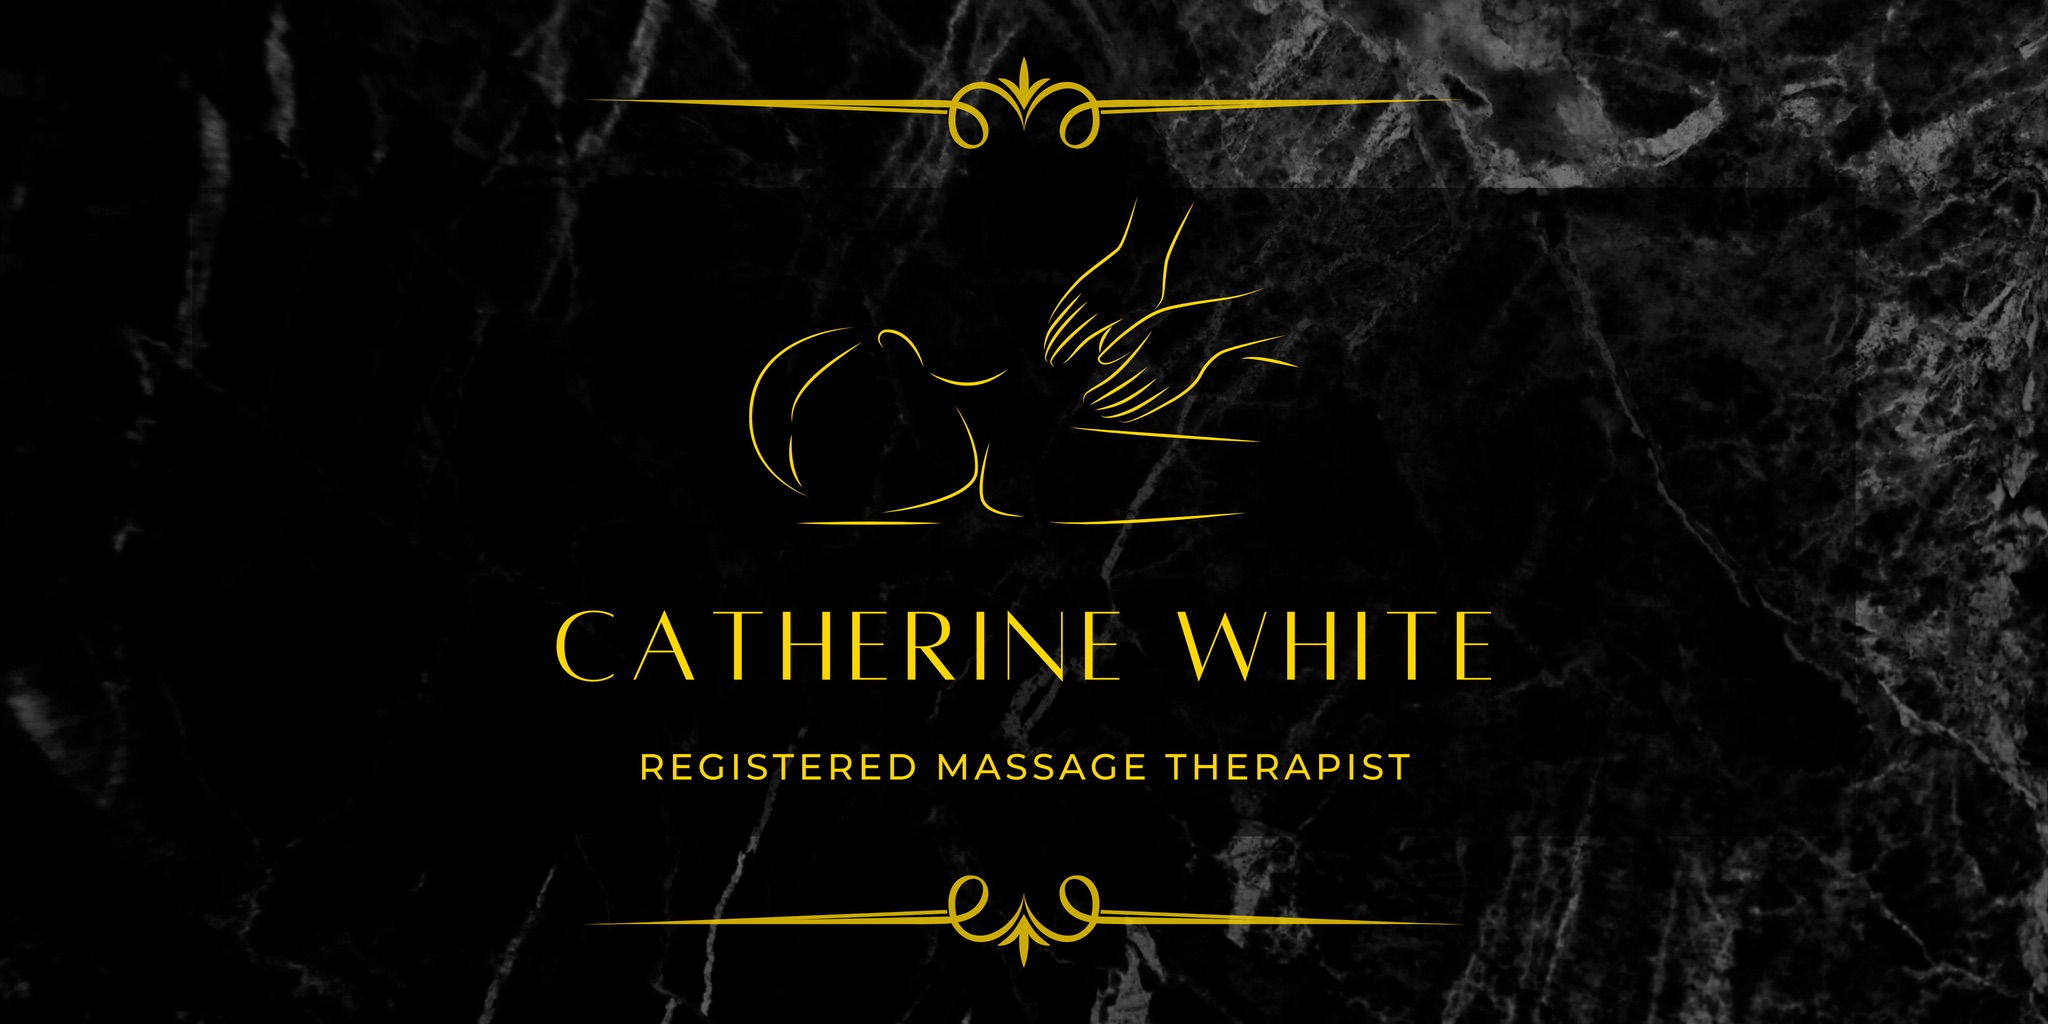 Catherine White RMT